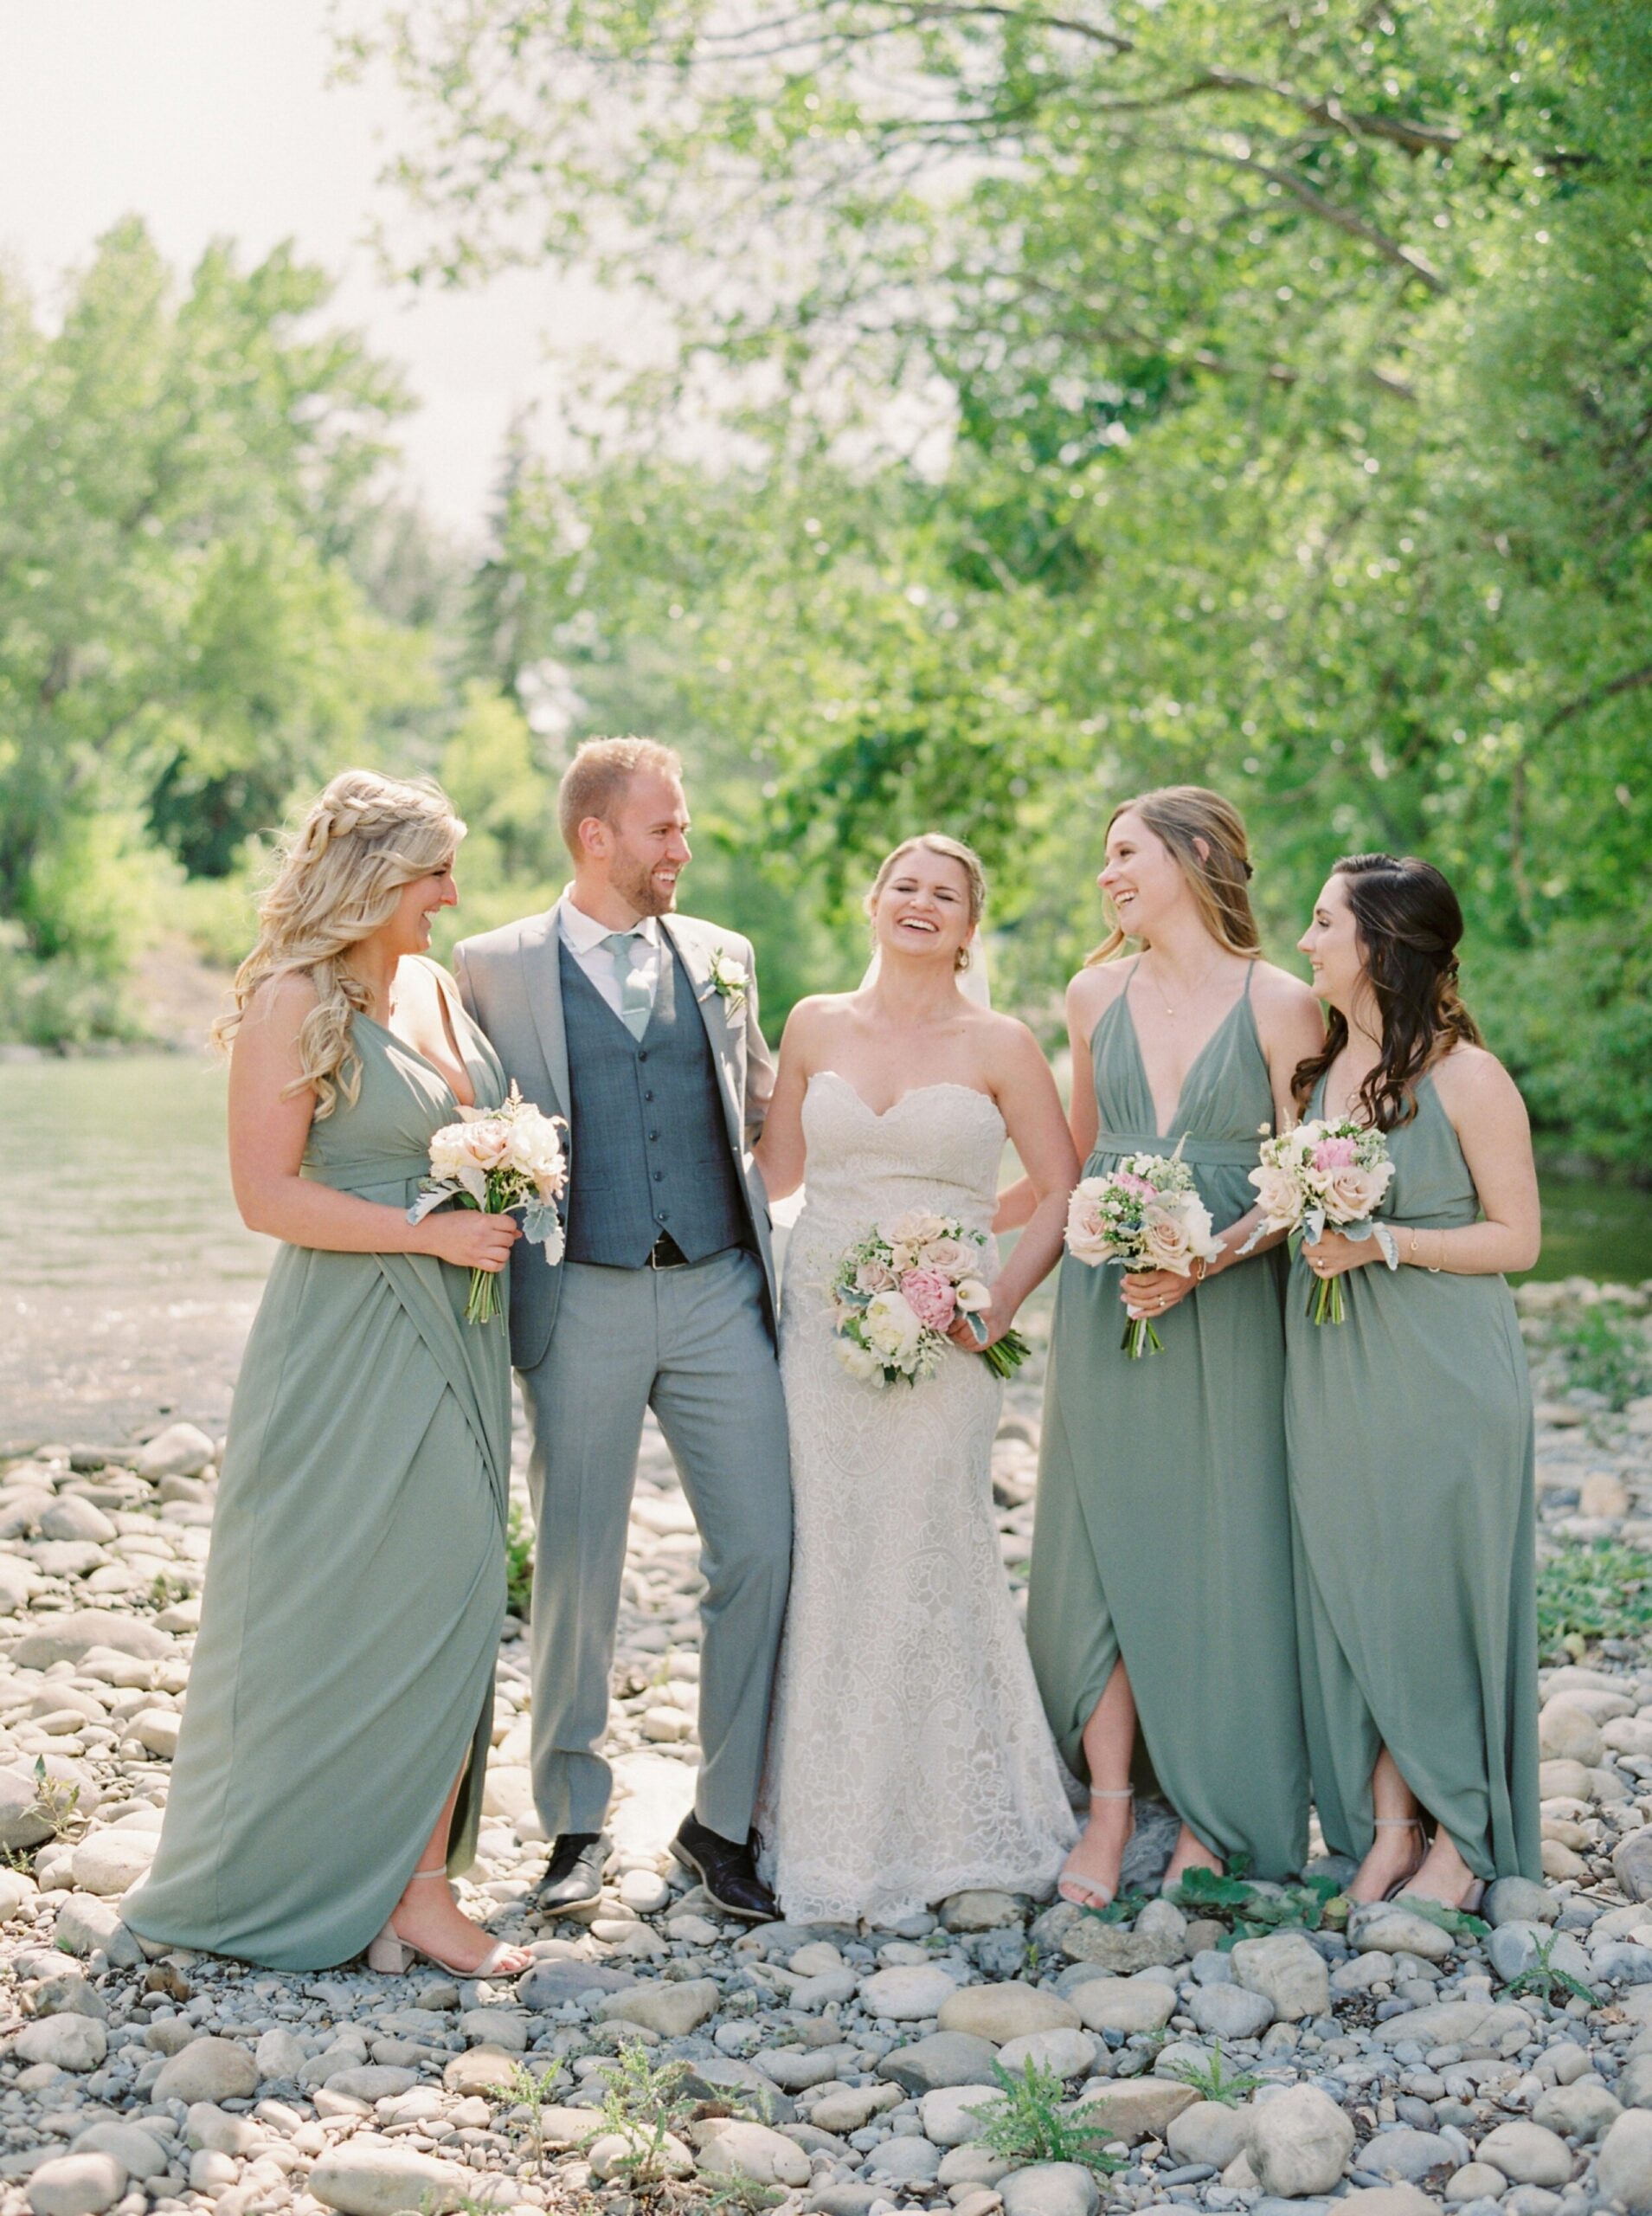  minty sage green bridesmaids and bridesman or bridesbro or brosmaid | Deane House Wedding | Calgary photographer | fine art film photography Justine Milton 